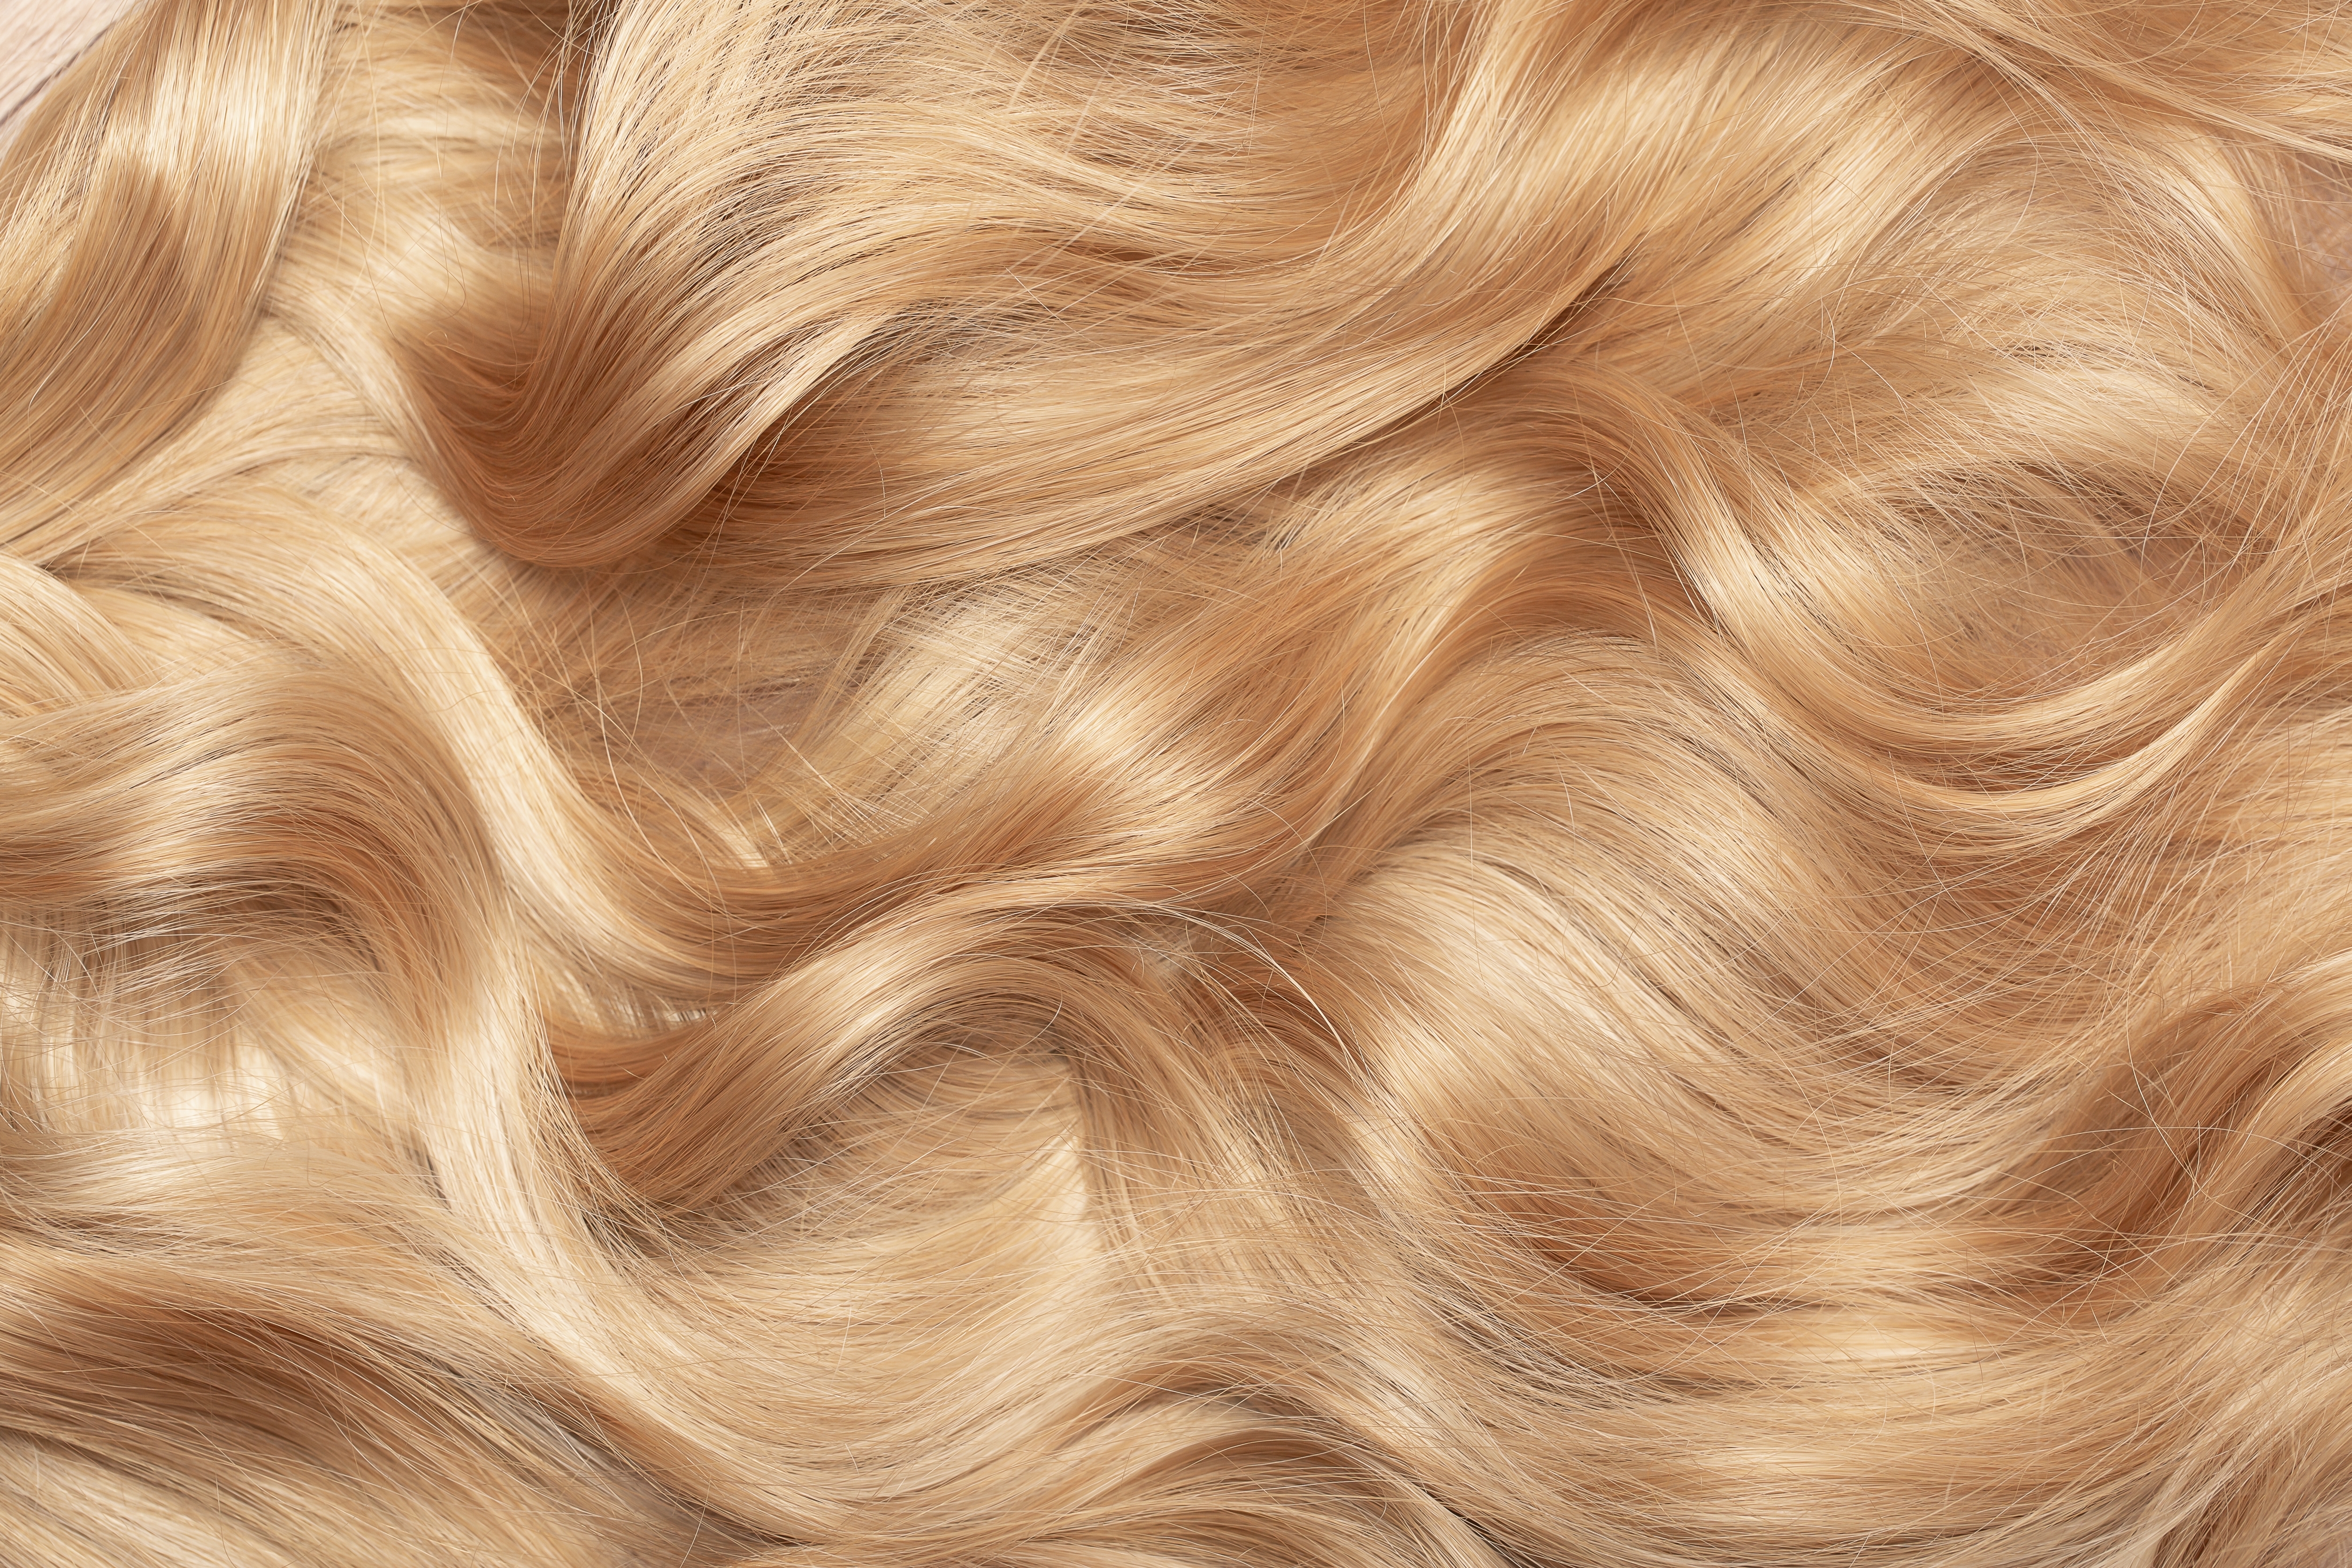 Locs of blonde hair | Source: Shutterstock